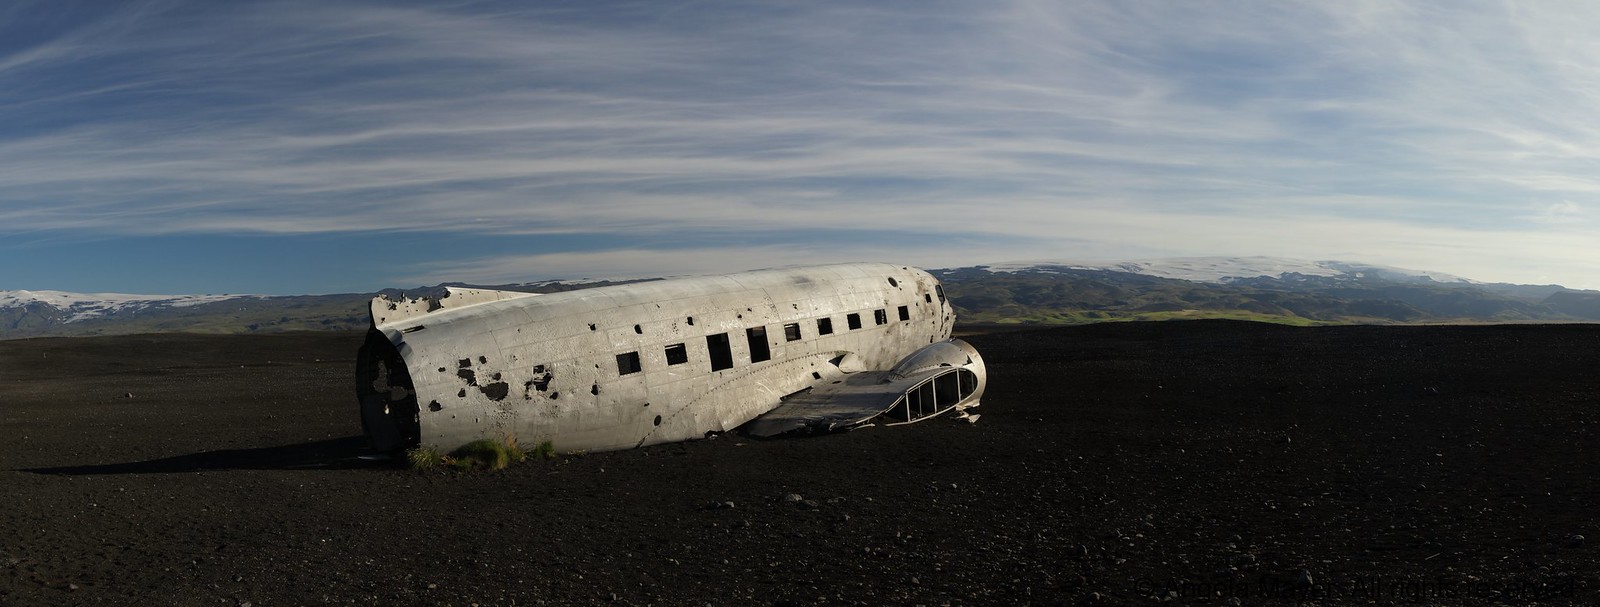 Wrecked Plane (DC-3) on Icelandic Beach